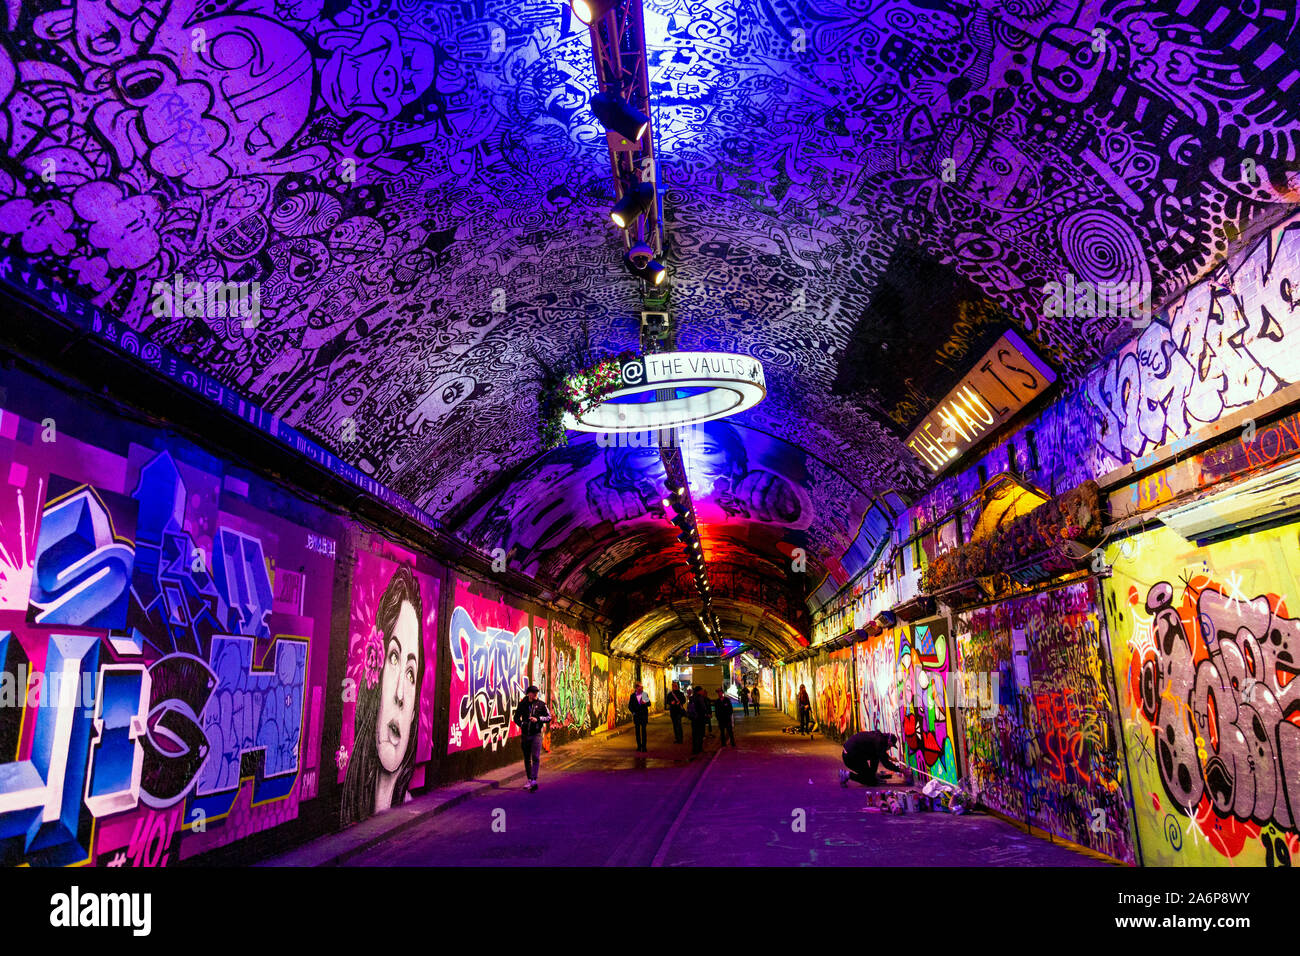 Farbenfrohe Kunstwerke und Wandmalereien im Inneren des Leake Street Graffiti Tunnel, London, UK Stockfoto